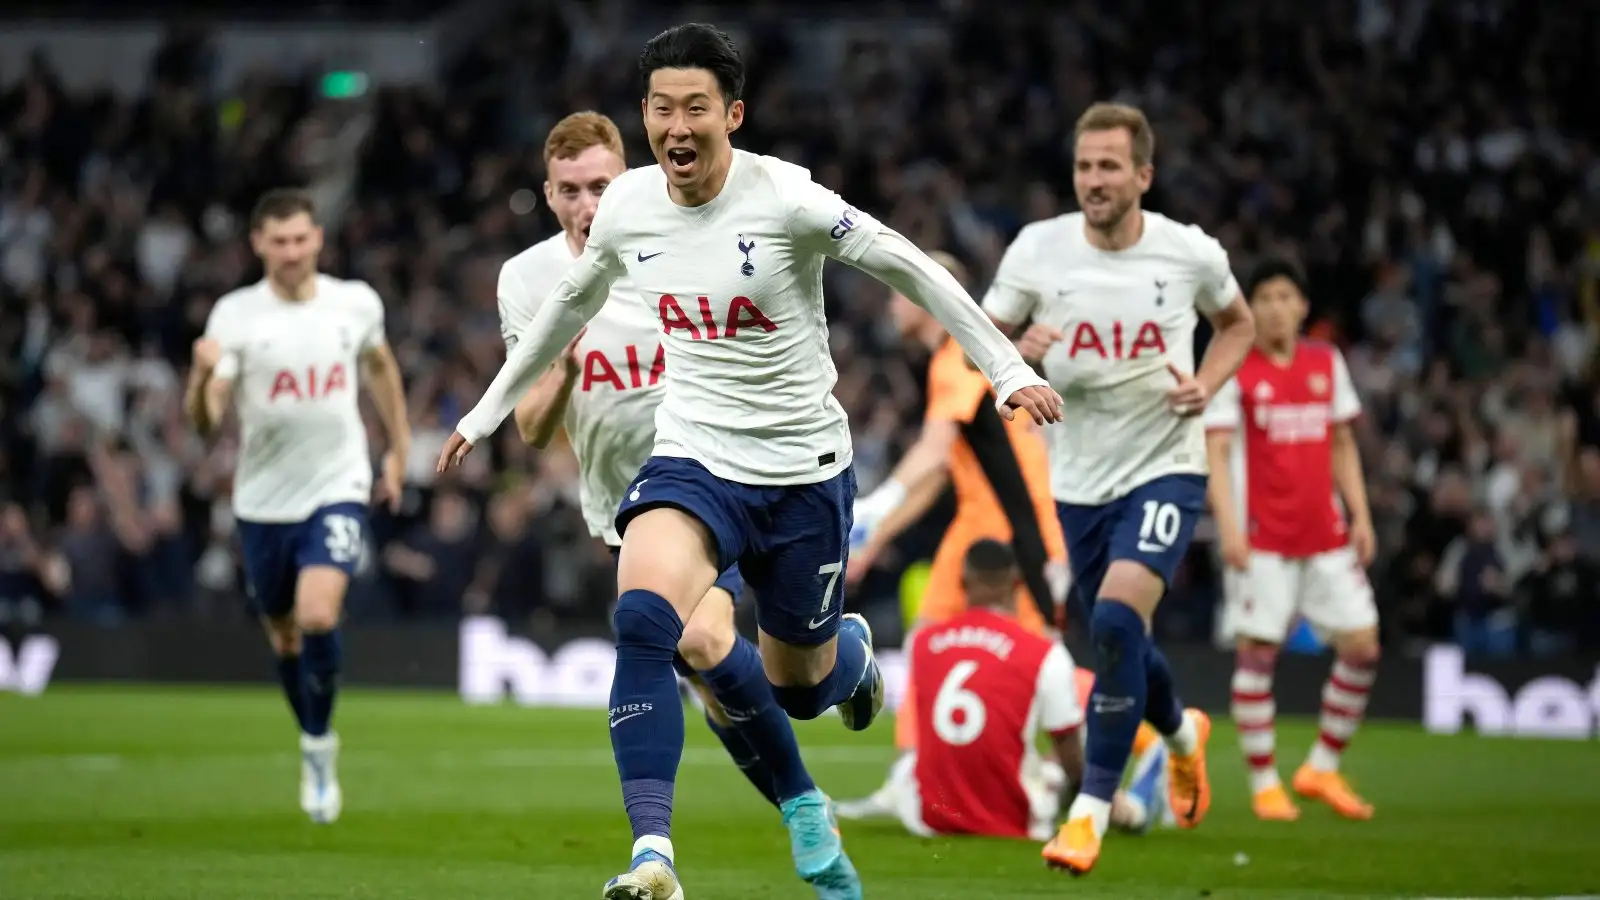 Tottenham forward Son Heung-min celebrates scoring a goal